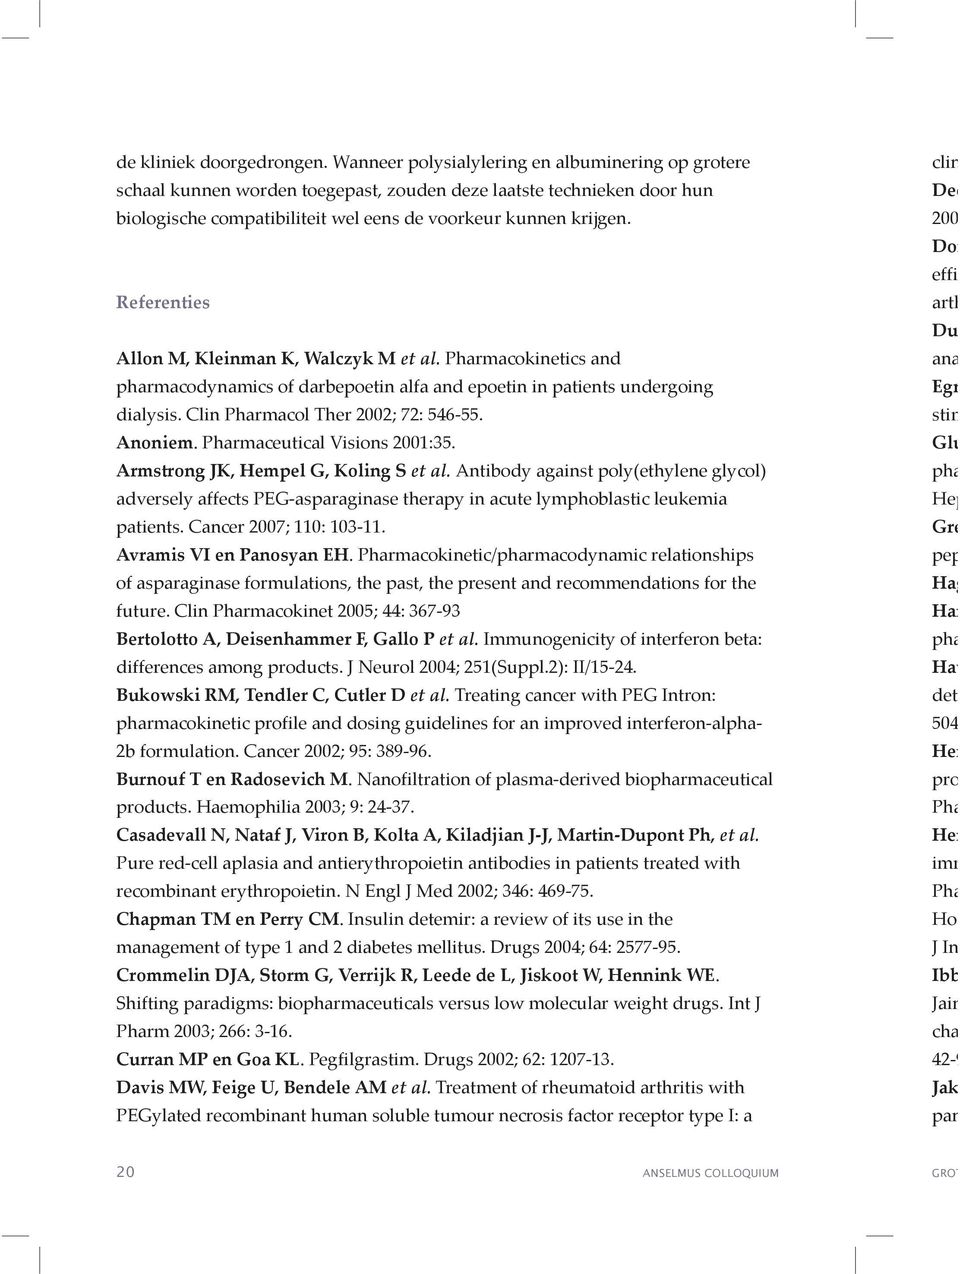 Referenties Allon M, Kleinman K, Walczyk M et al. Pharmacokinetics and pharmacodynamics of darbepoetin alfa and epoetin in patients undergoing dialysis. Clin Pharmacol Ther 2002; 72: 546-55. Anoniem.